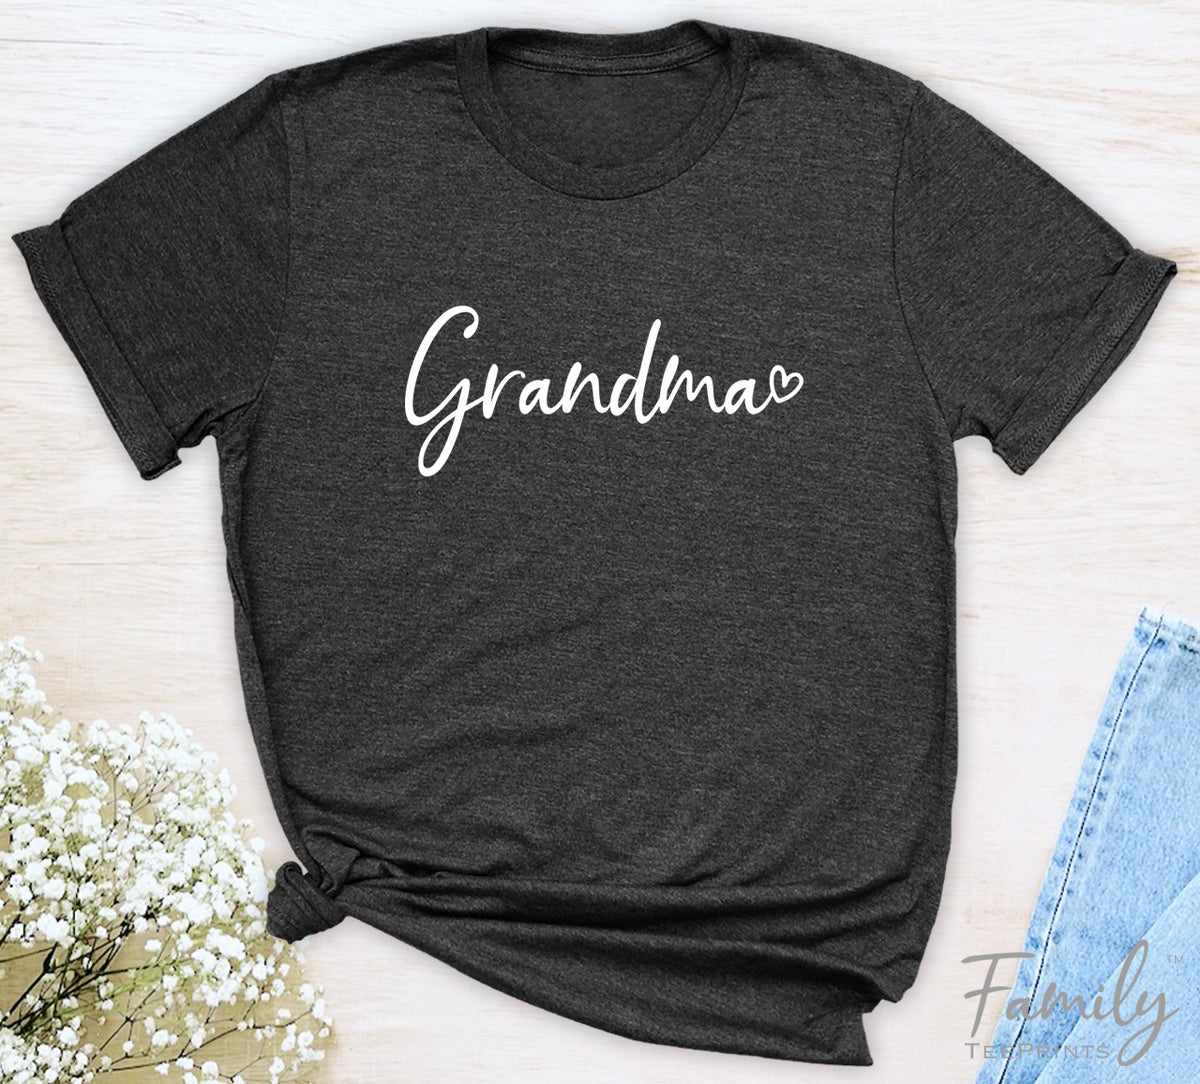 Grandma Heart - Unisex T-shirt - Grandma Shirt - Gift For New Grandma - familyteeprints